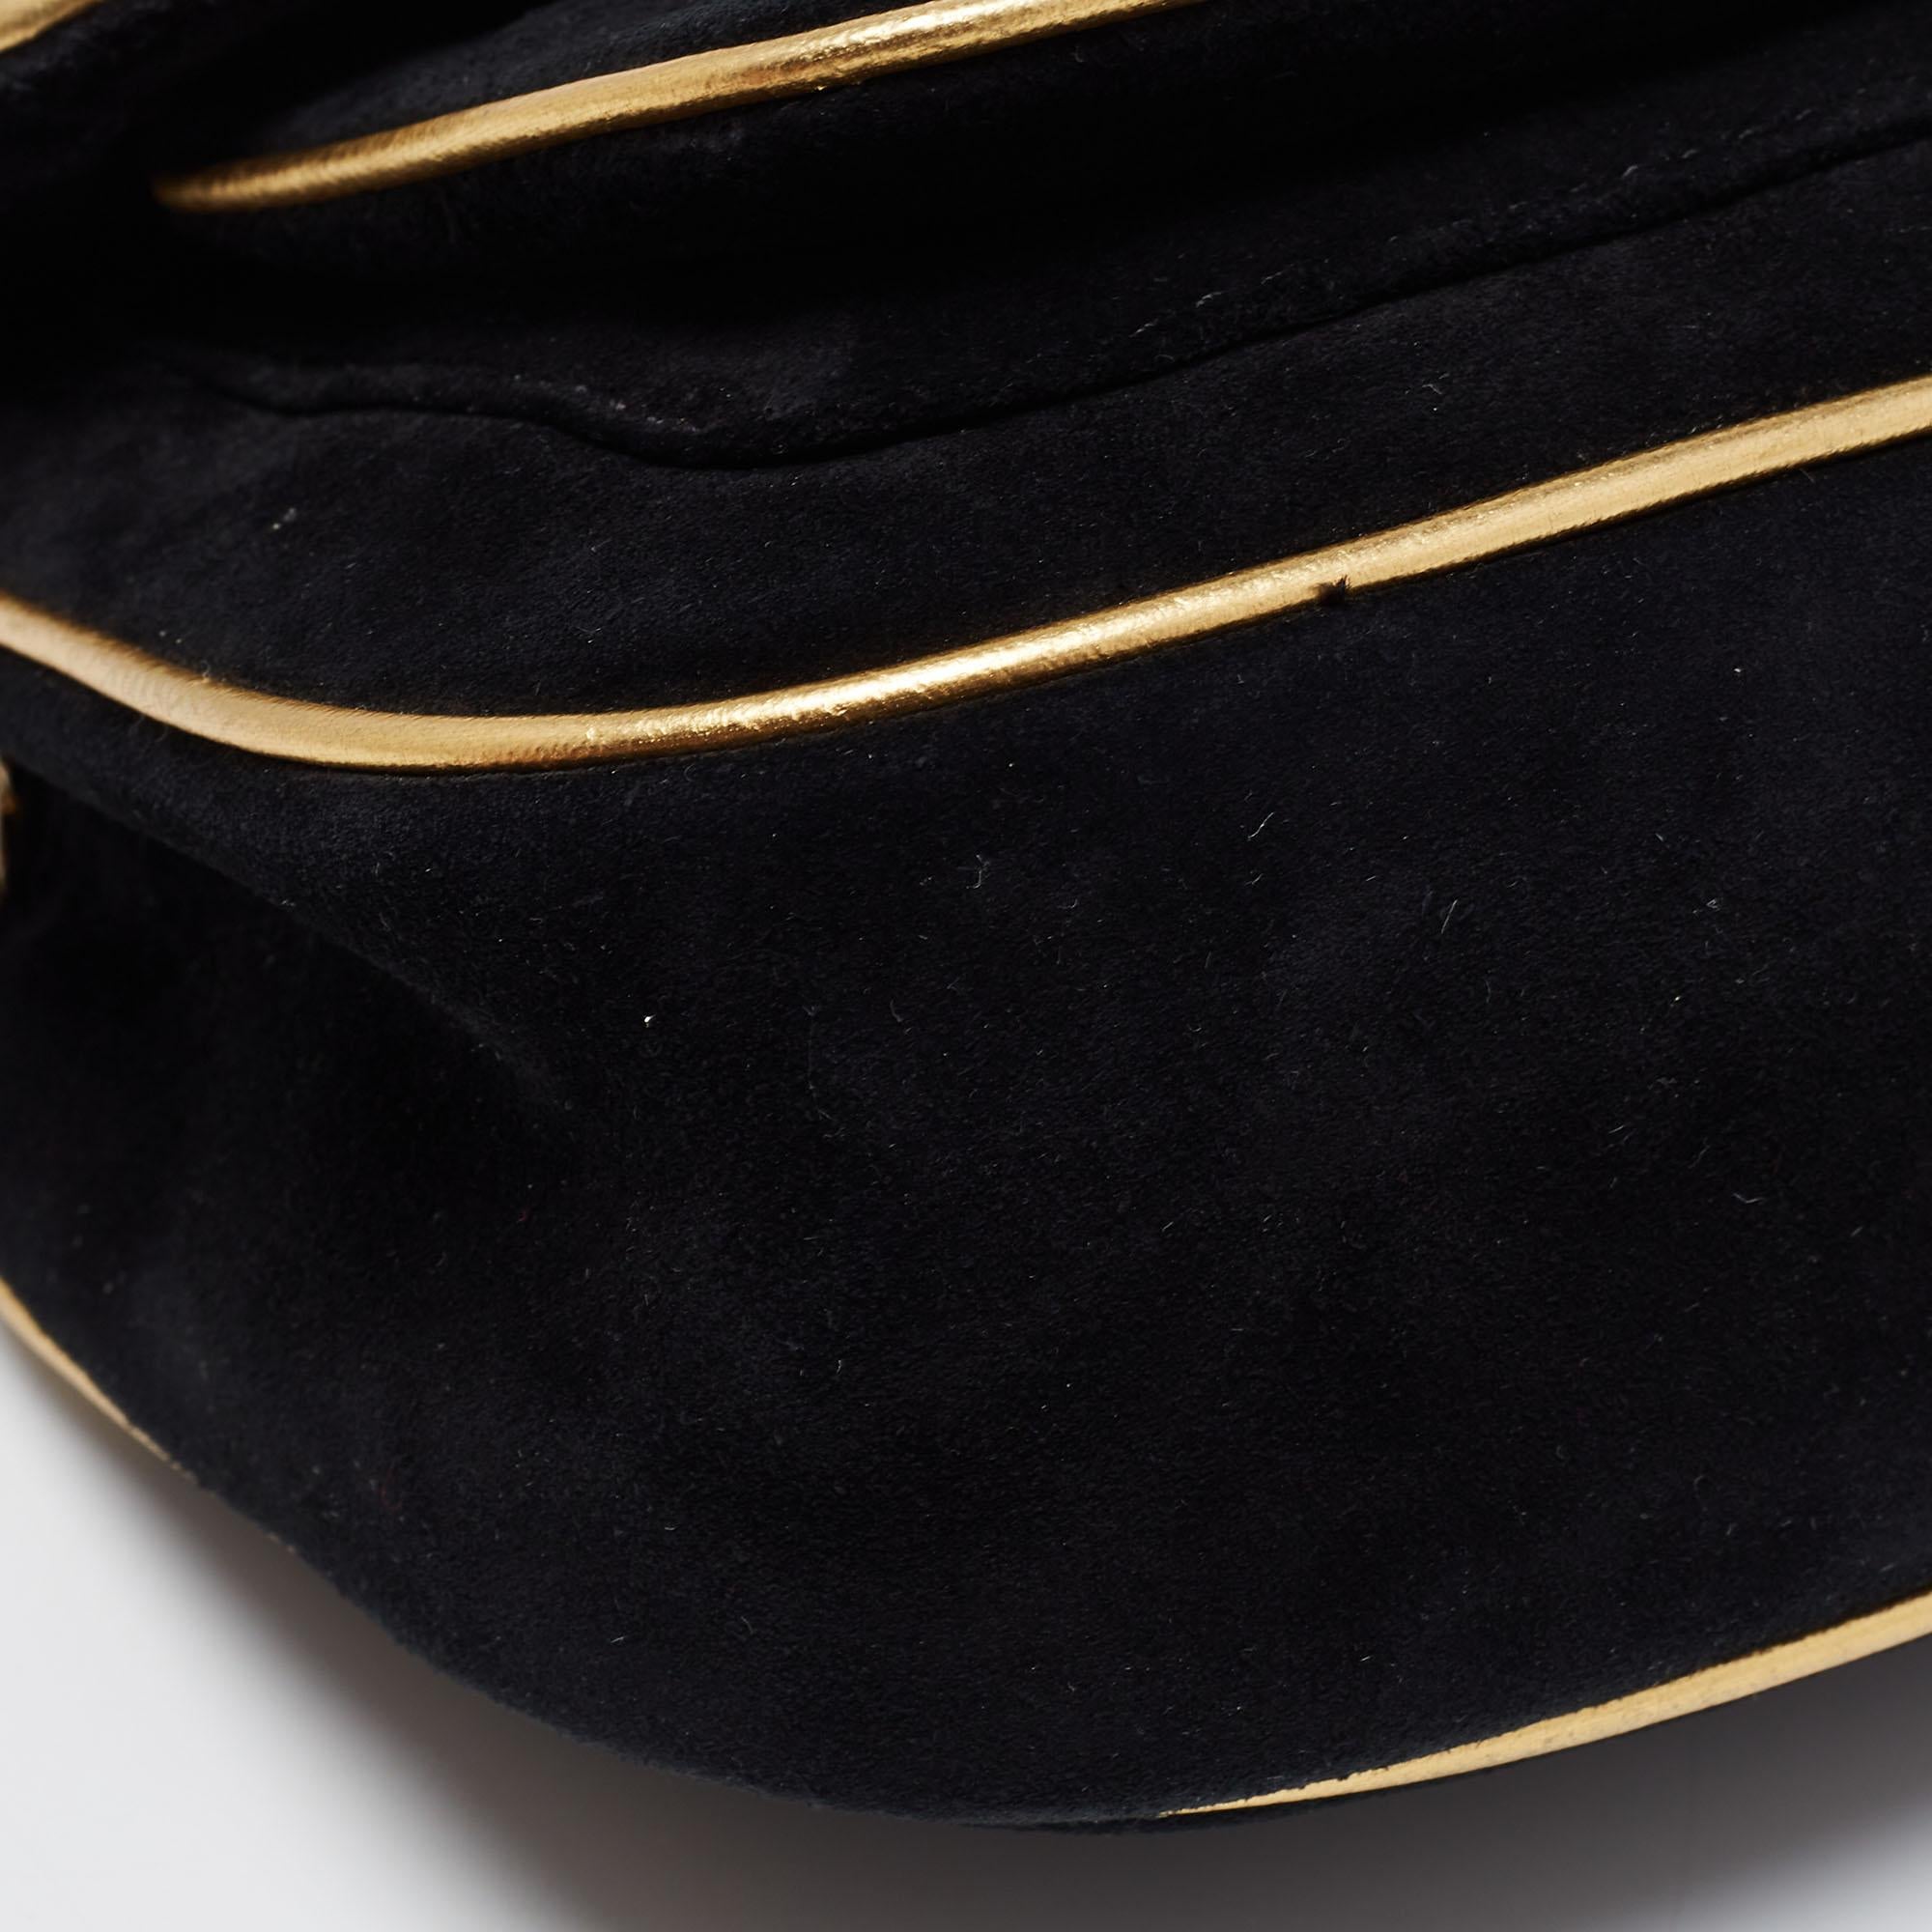 Michael Kors Black/Gold Suede and Leather Small Sloan Shoulder Bag 4